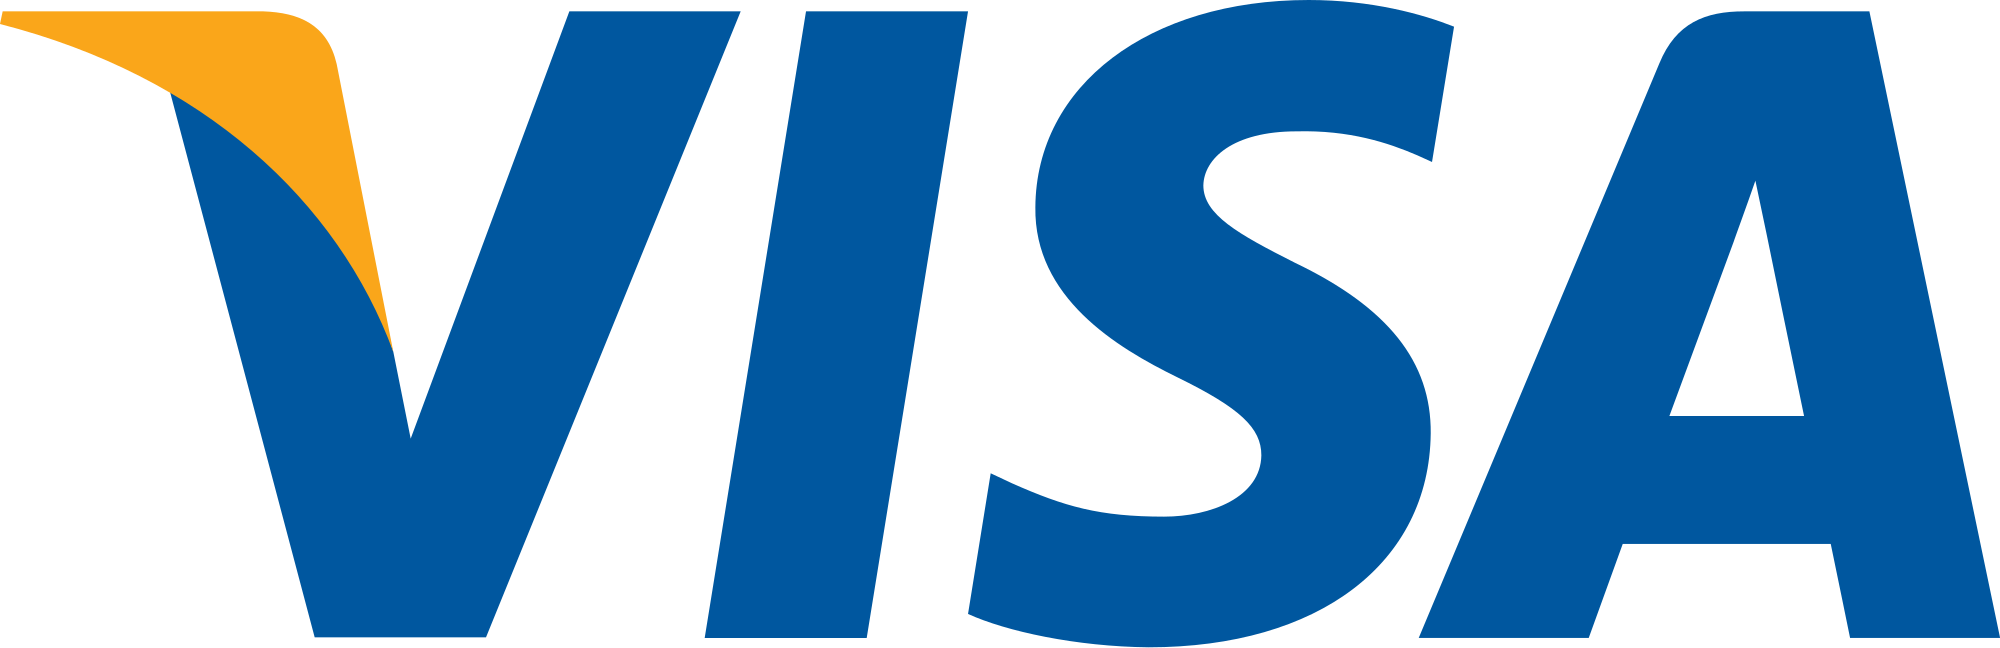 Visa Logo Png.